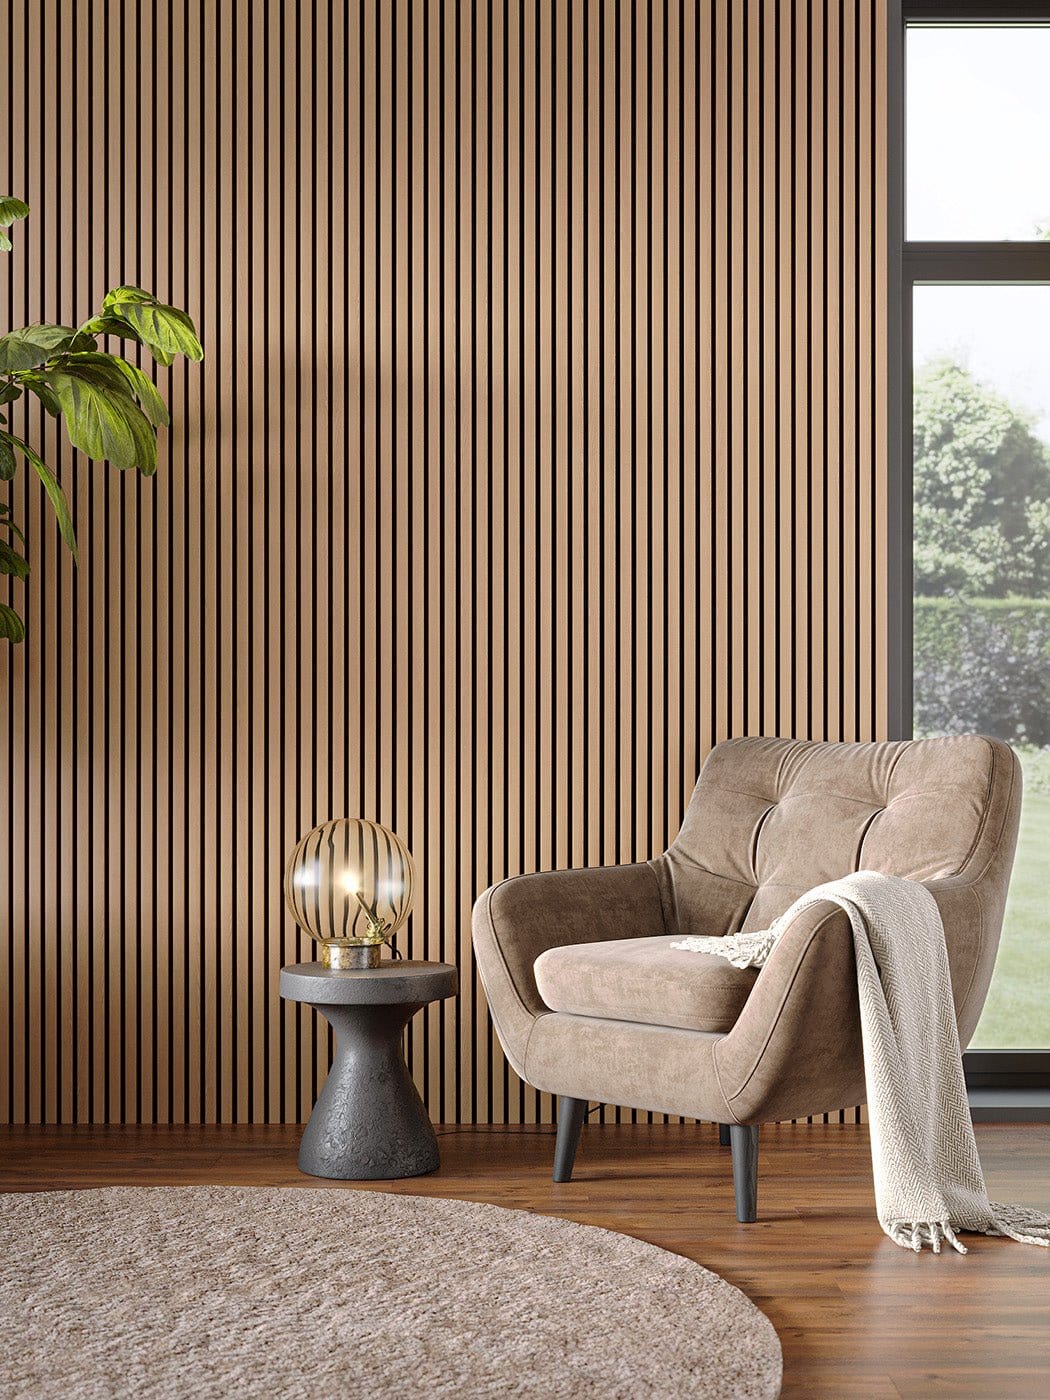 Oak slat wood wall panels in living room with armchair